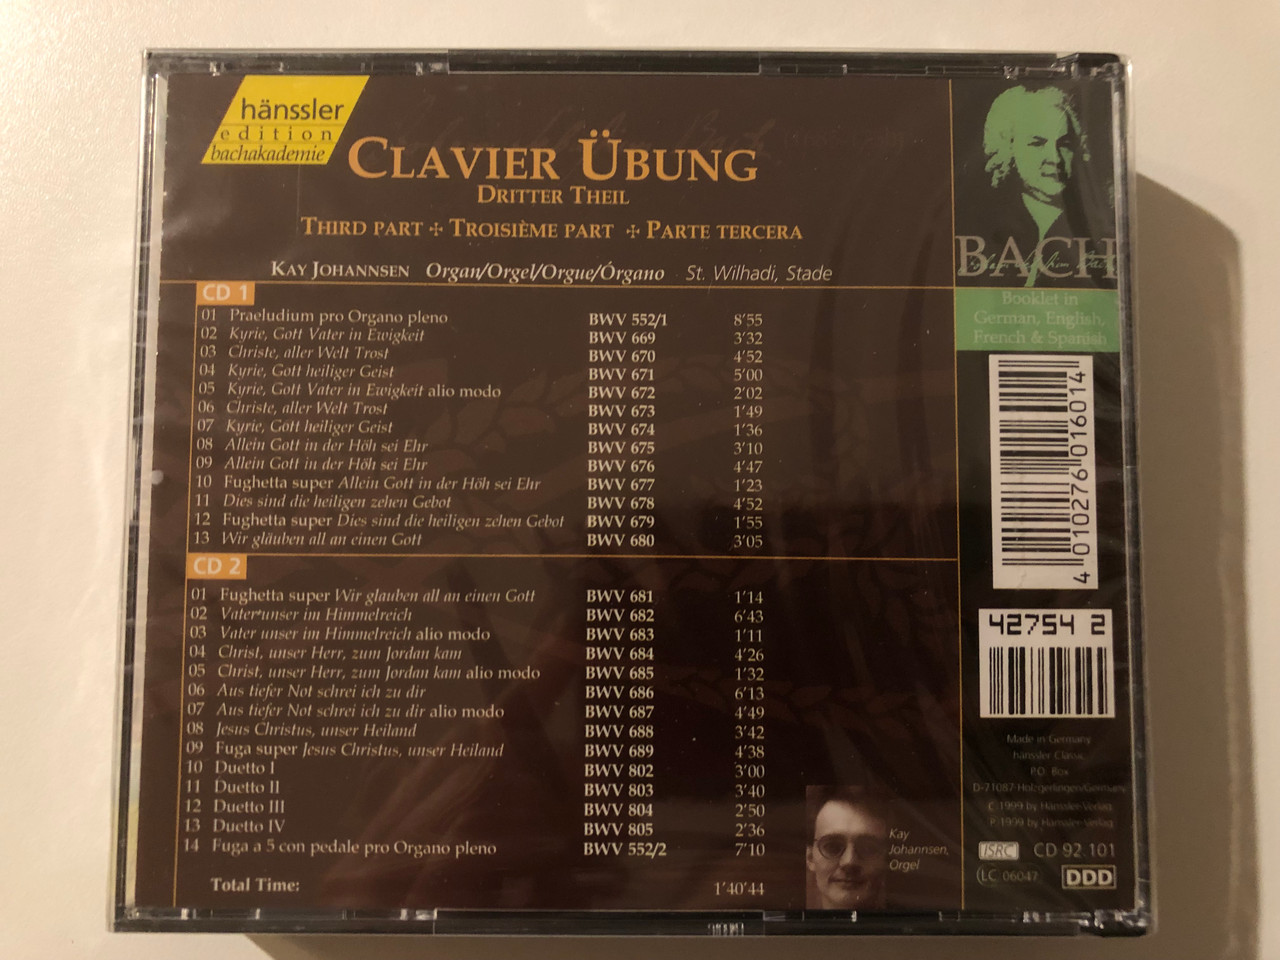 Johann Sebastian Bach - Clavier-Übung (Dritter Theil / Third Part /  Troisième Part) / Kay Johannsen - organ / Hänssler Edition Bachakademie 2x  Audio CD 1999 / CD 92.101 - Bible in My Language